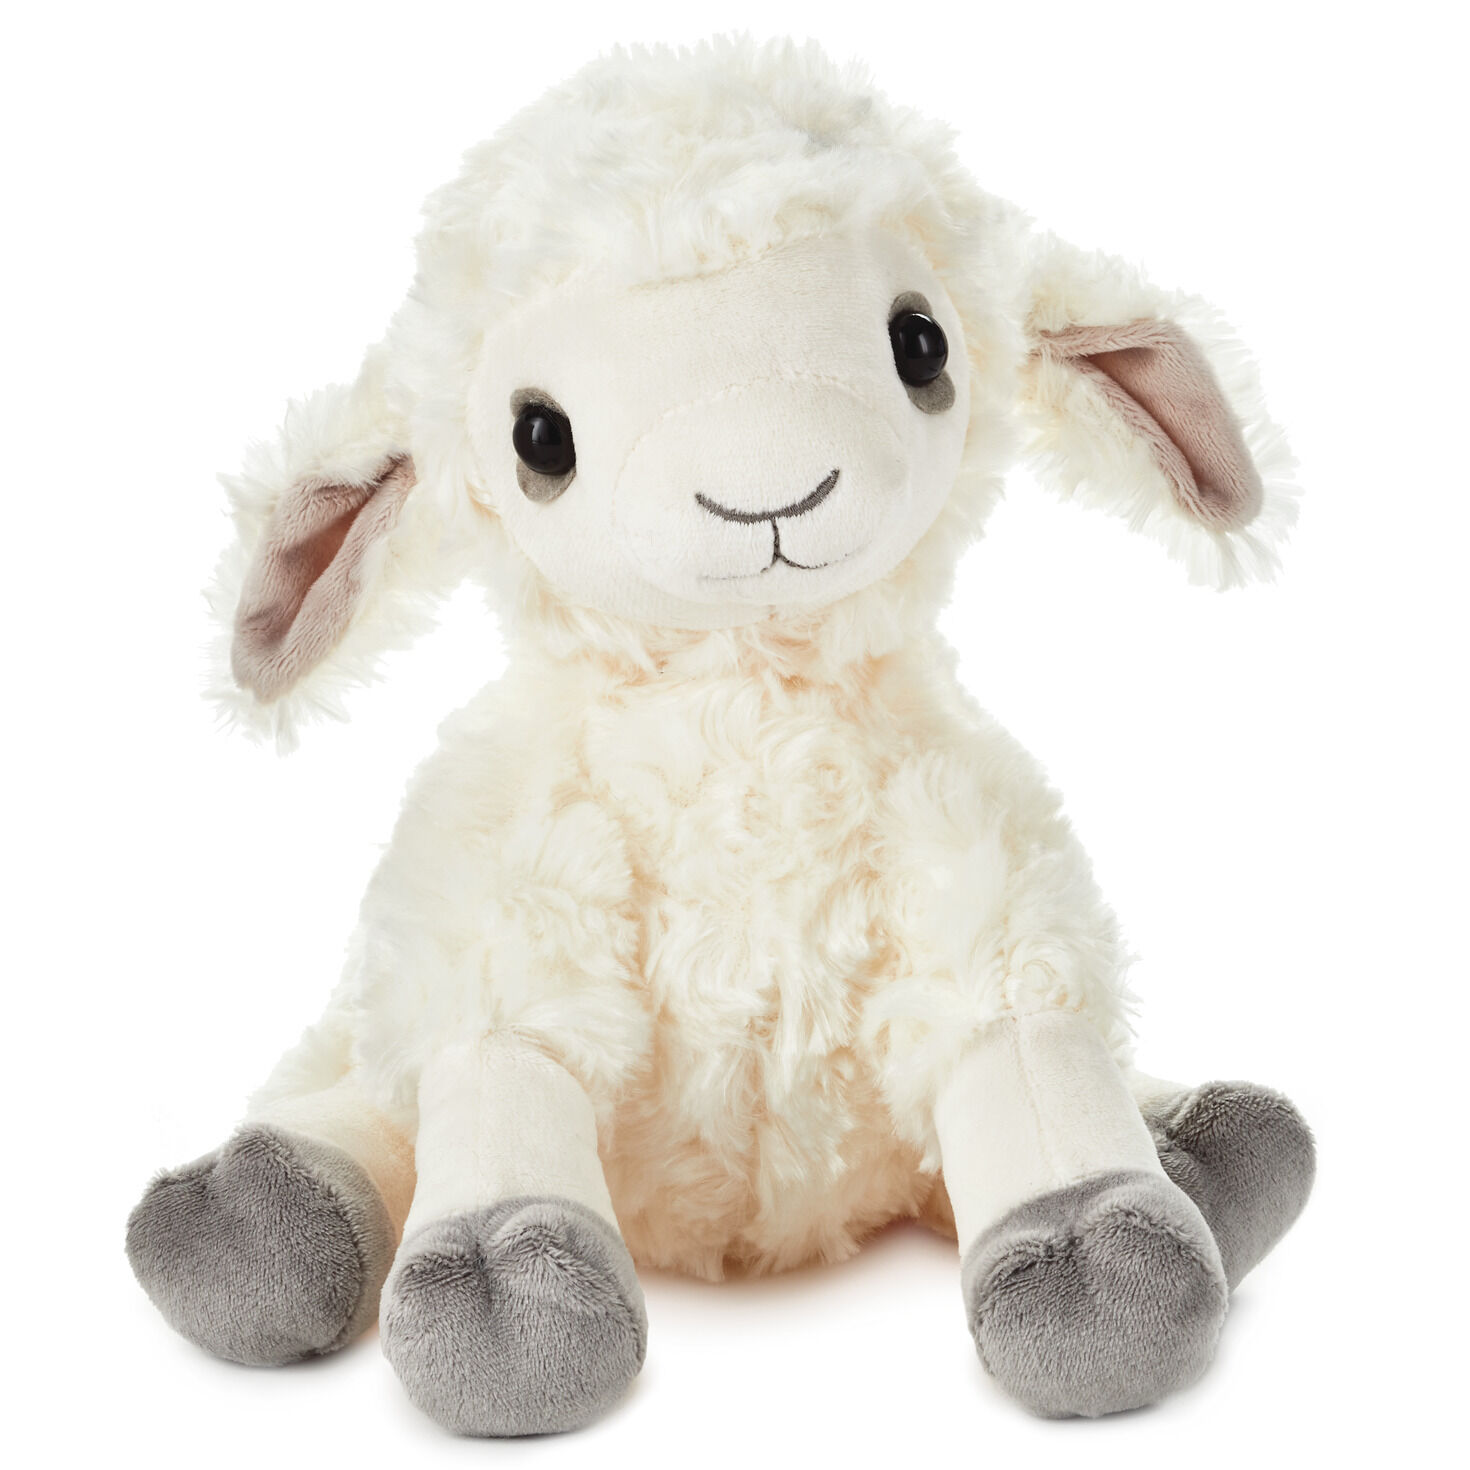 baby sheep stuffed animal